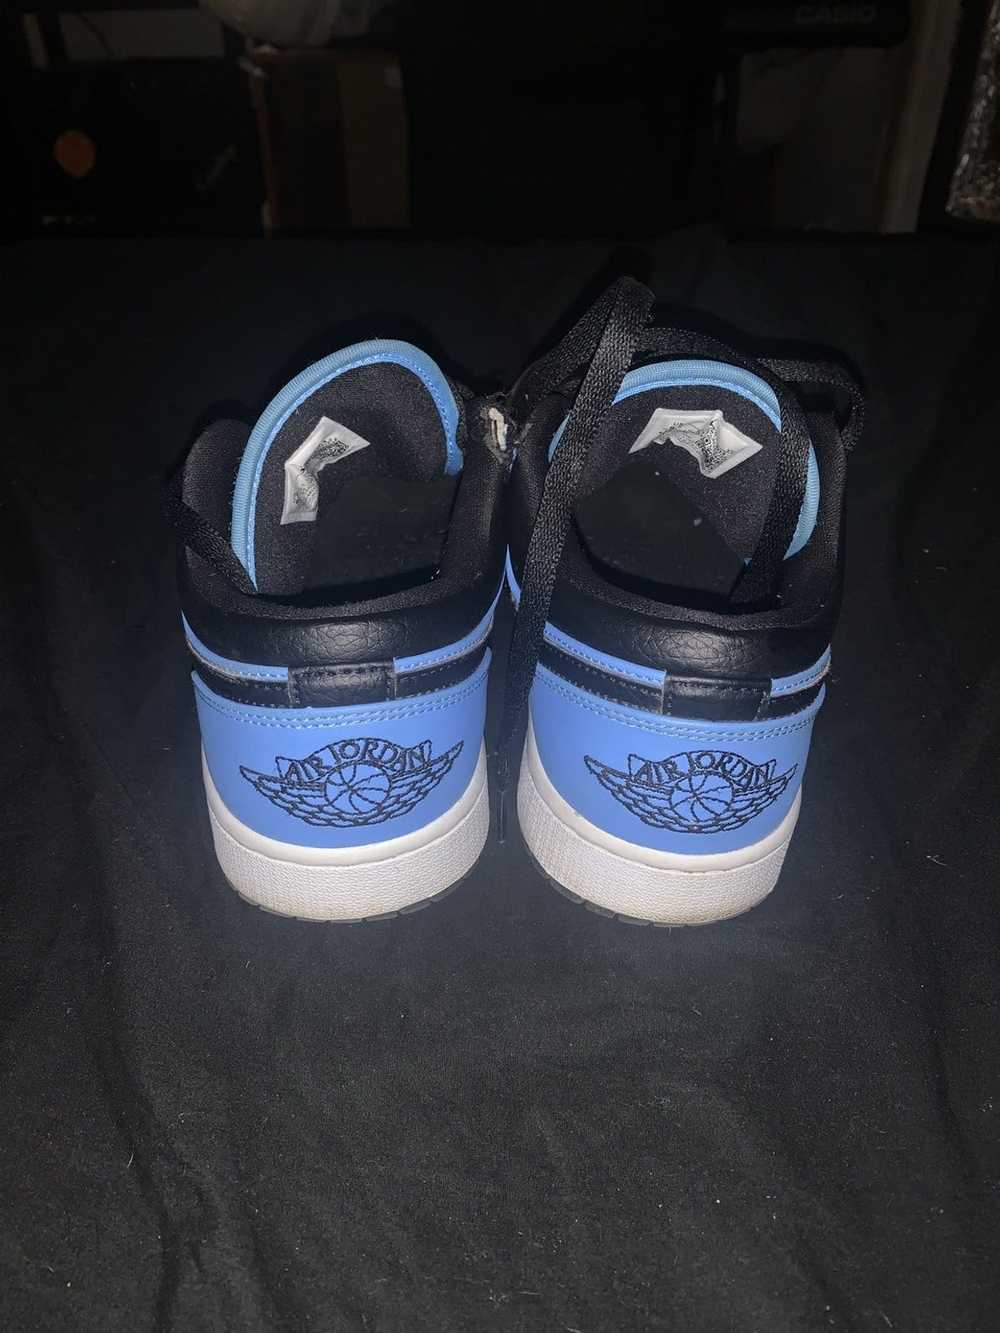 Jordan Brand × Nike Jordan 1 low unc blue black - image 6